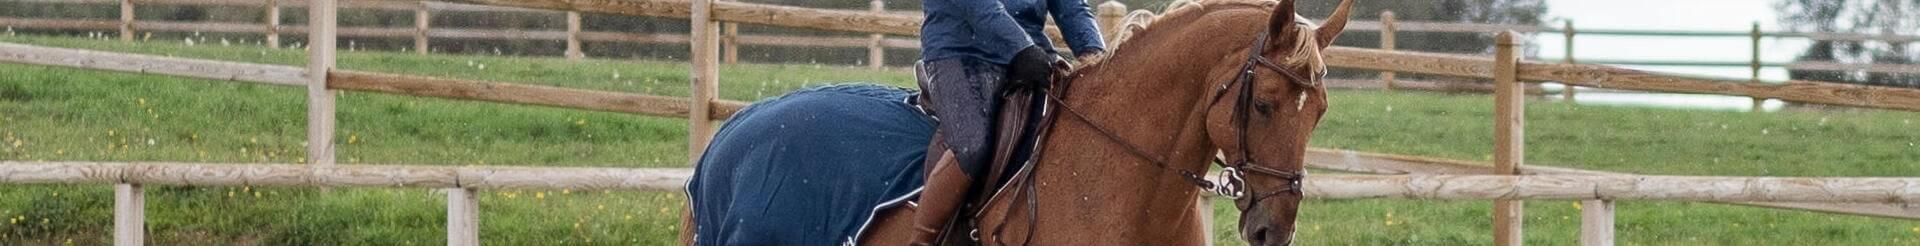 Horse Riding / Equestrian Sports